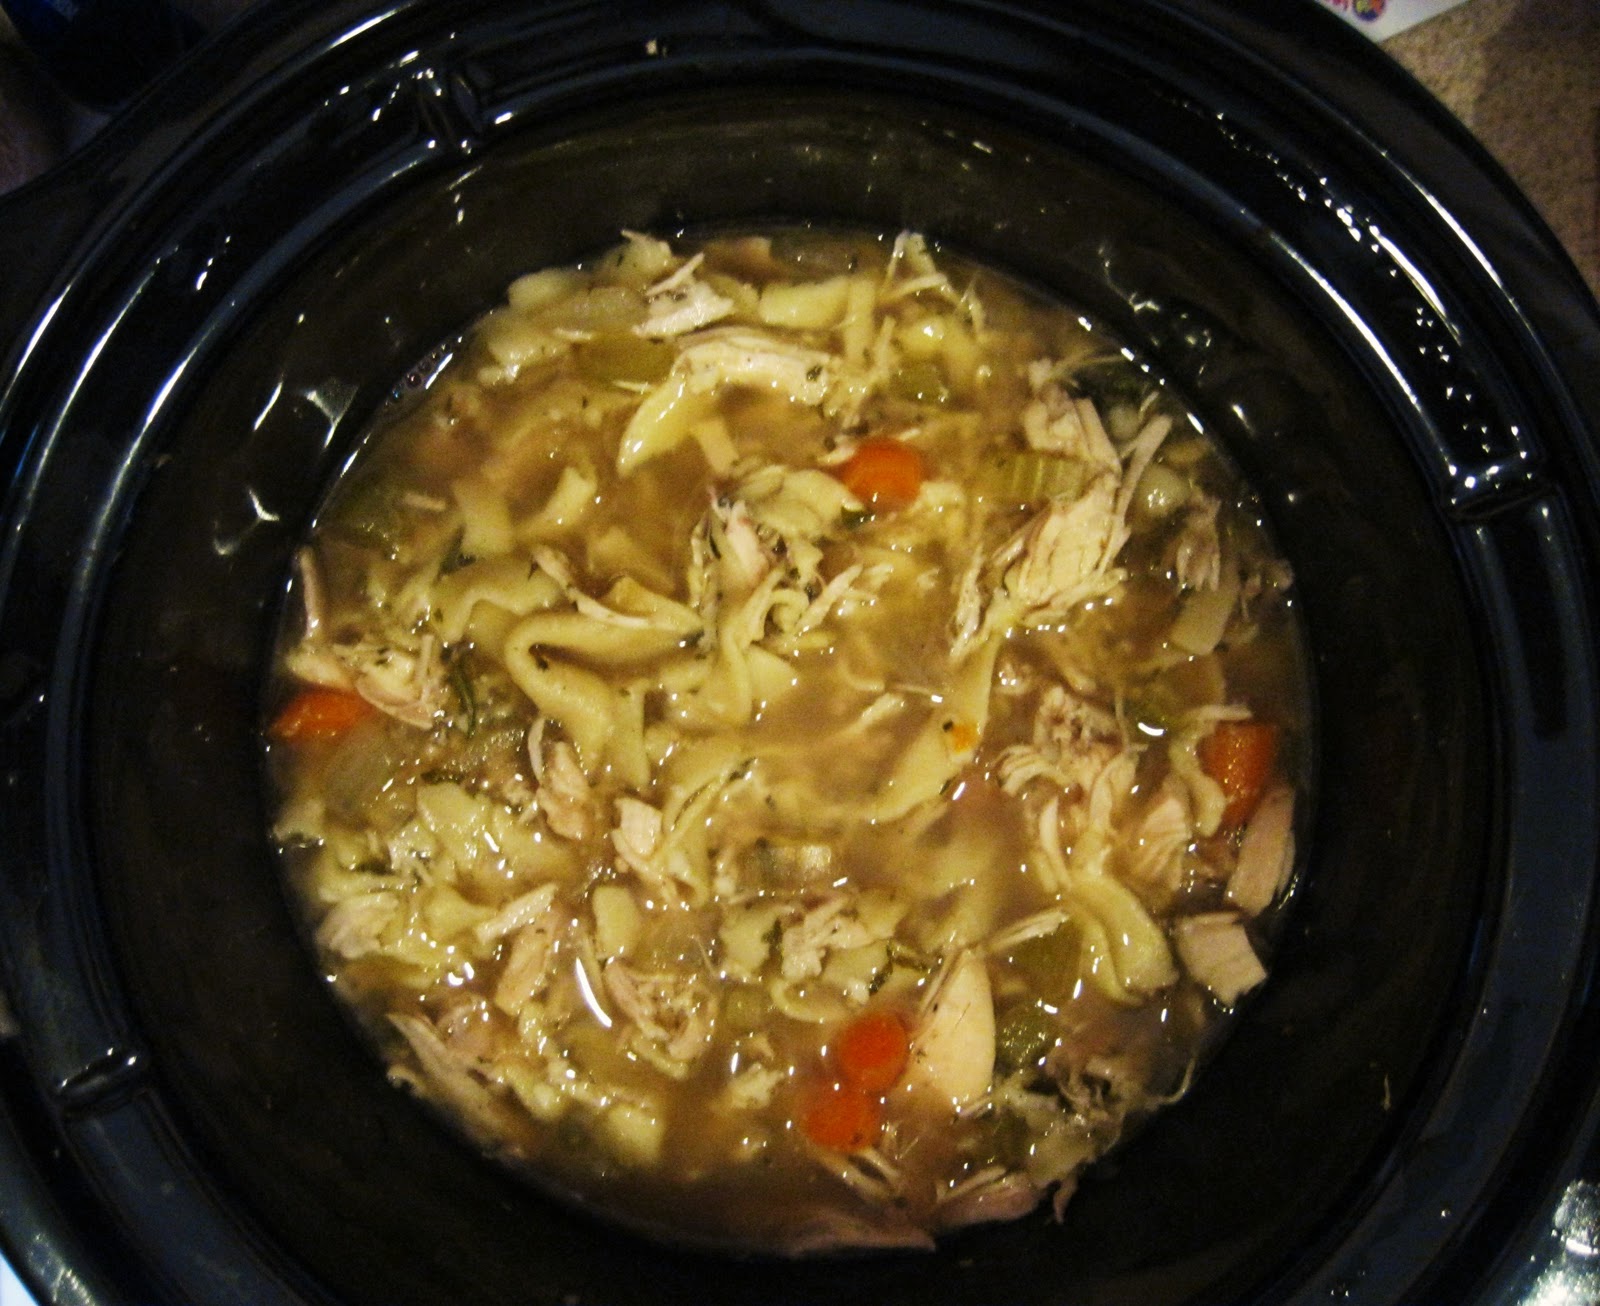 christineiscooking.com: Crock Pot Chicken Noodle Soup with Parmesan